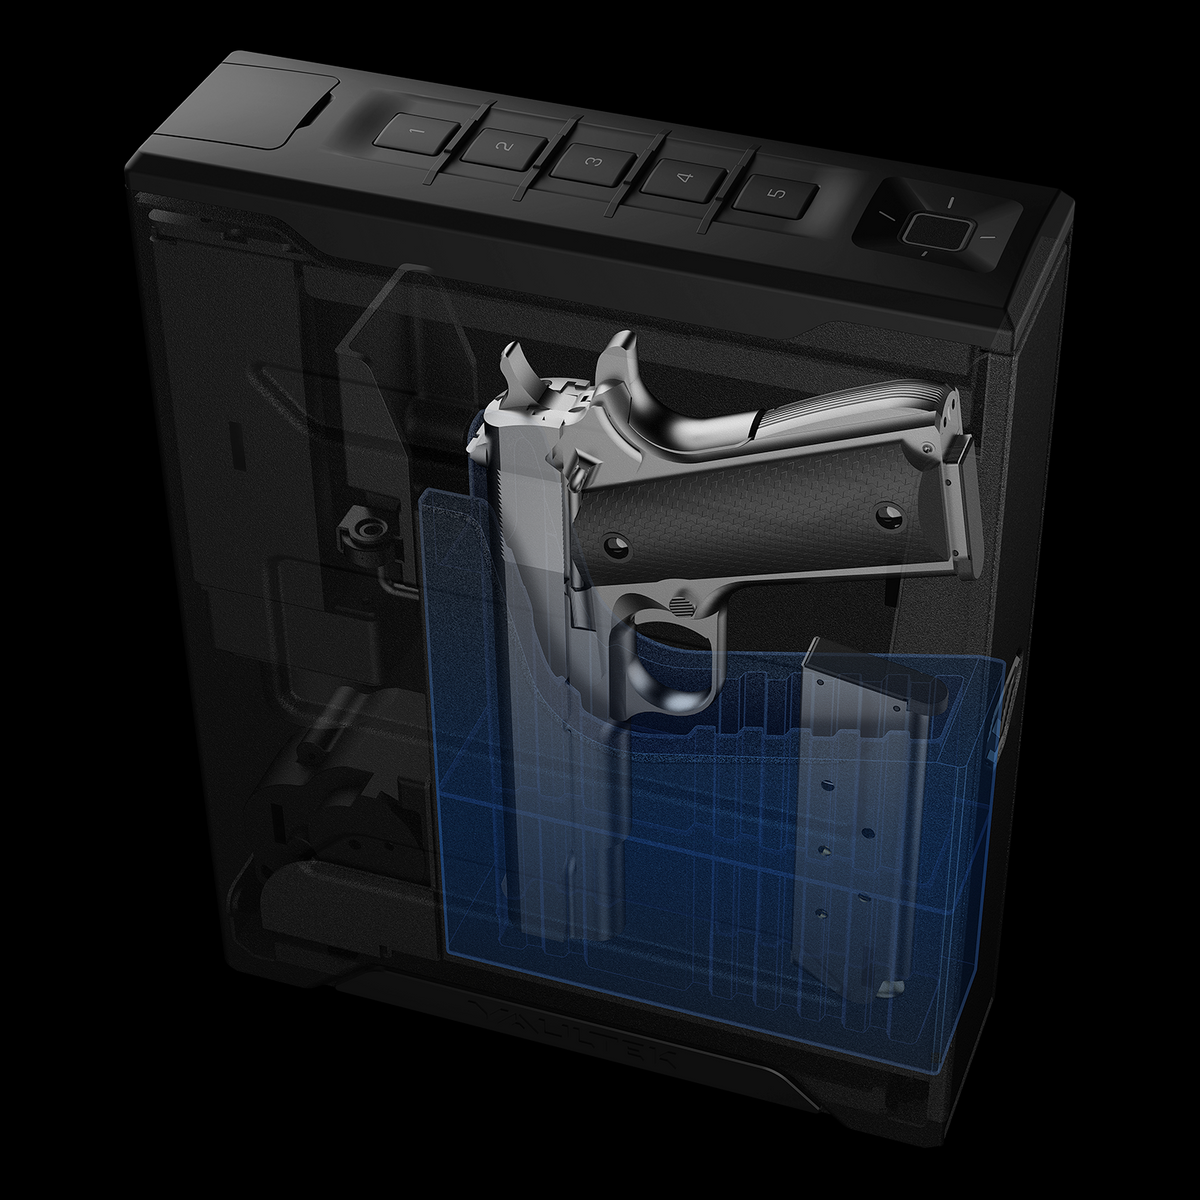 Vaultek SR20 Bluetooth 2.0 Slider Handgun Safe Showing Inside with Pistol